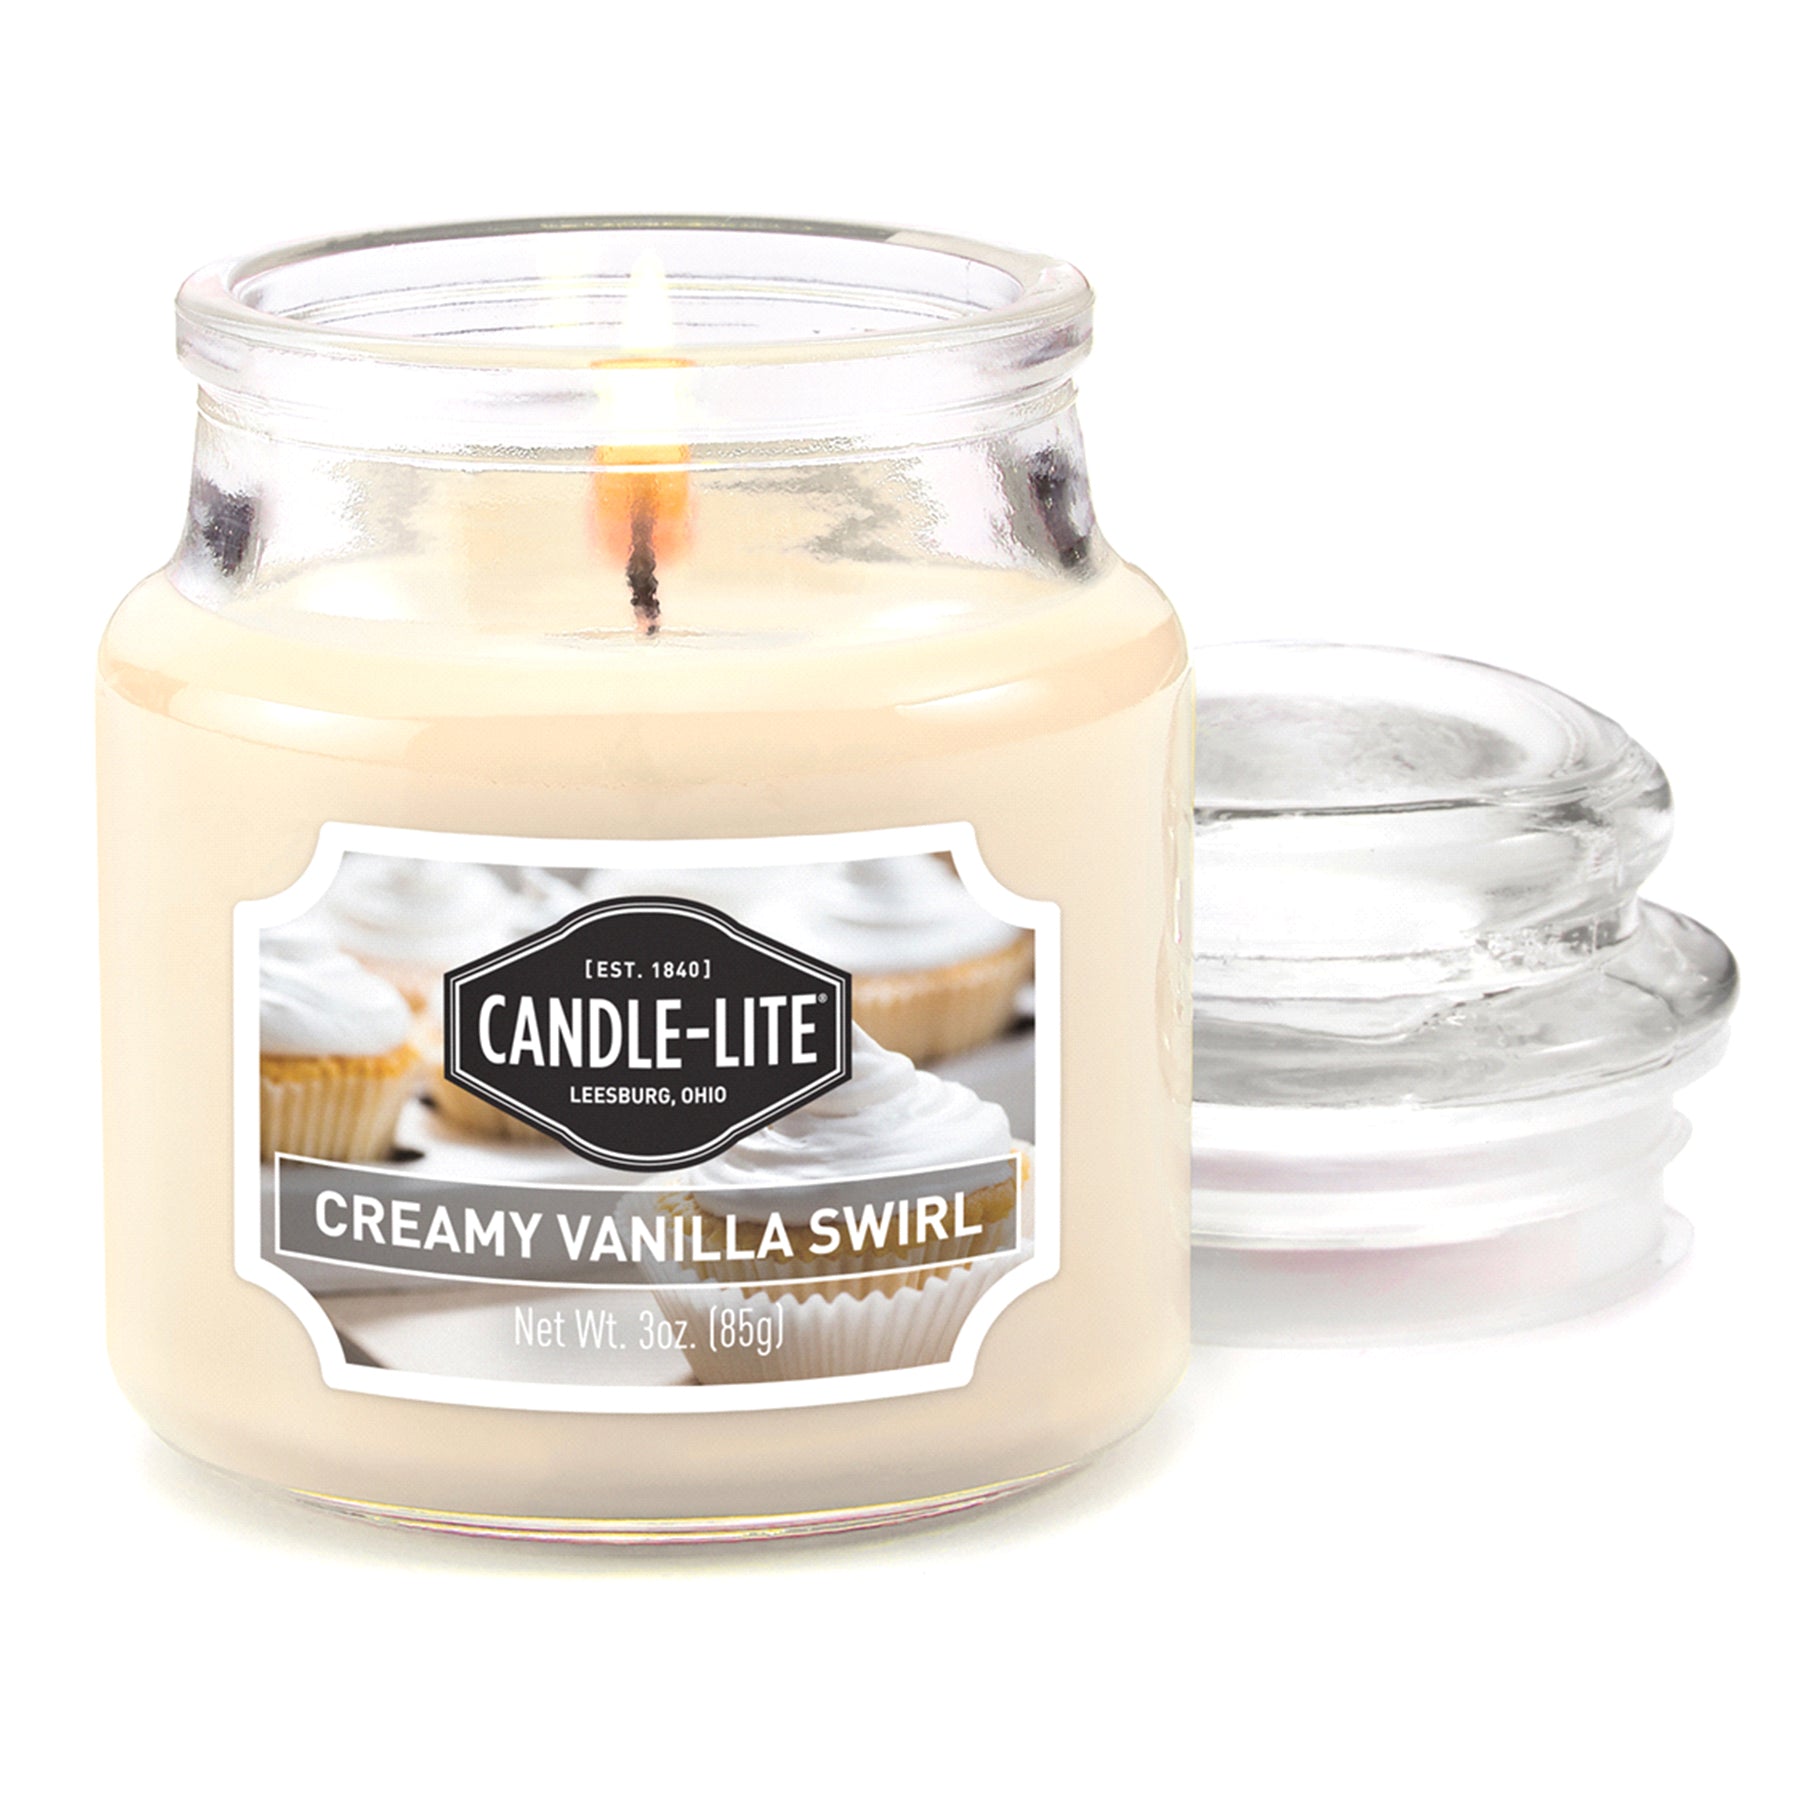 Candle with Fragrance - Creamy vanilla swirl